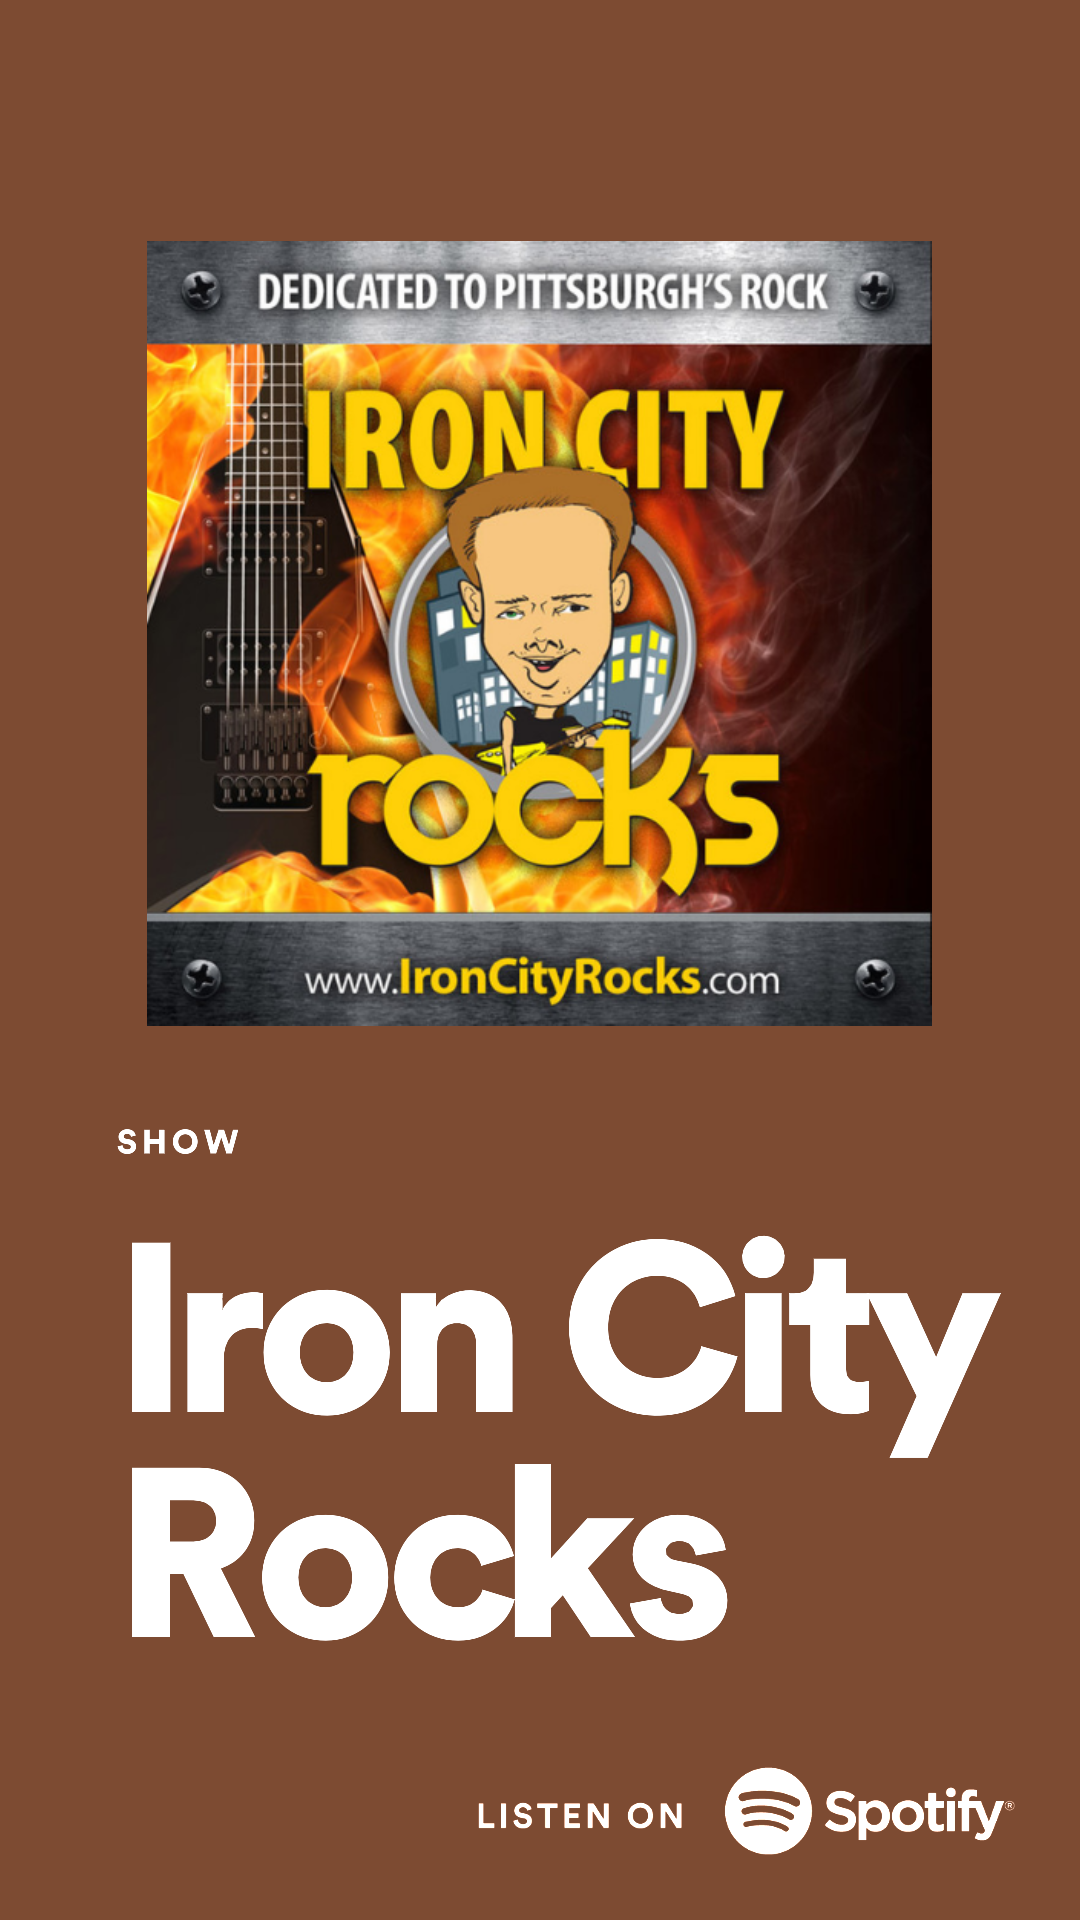 Drusky Entertainment Concert Calendar Iron City Rocks